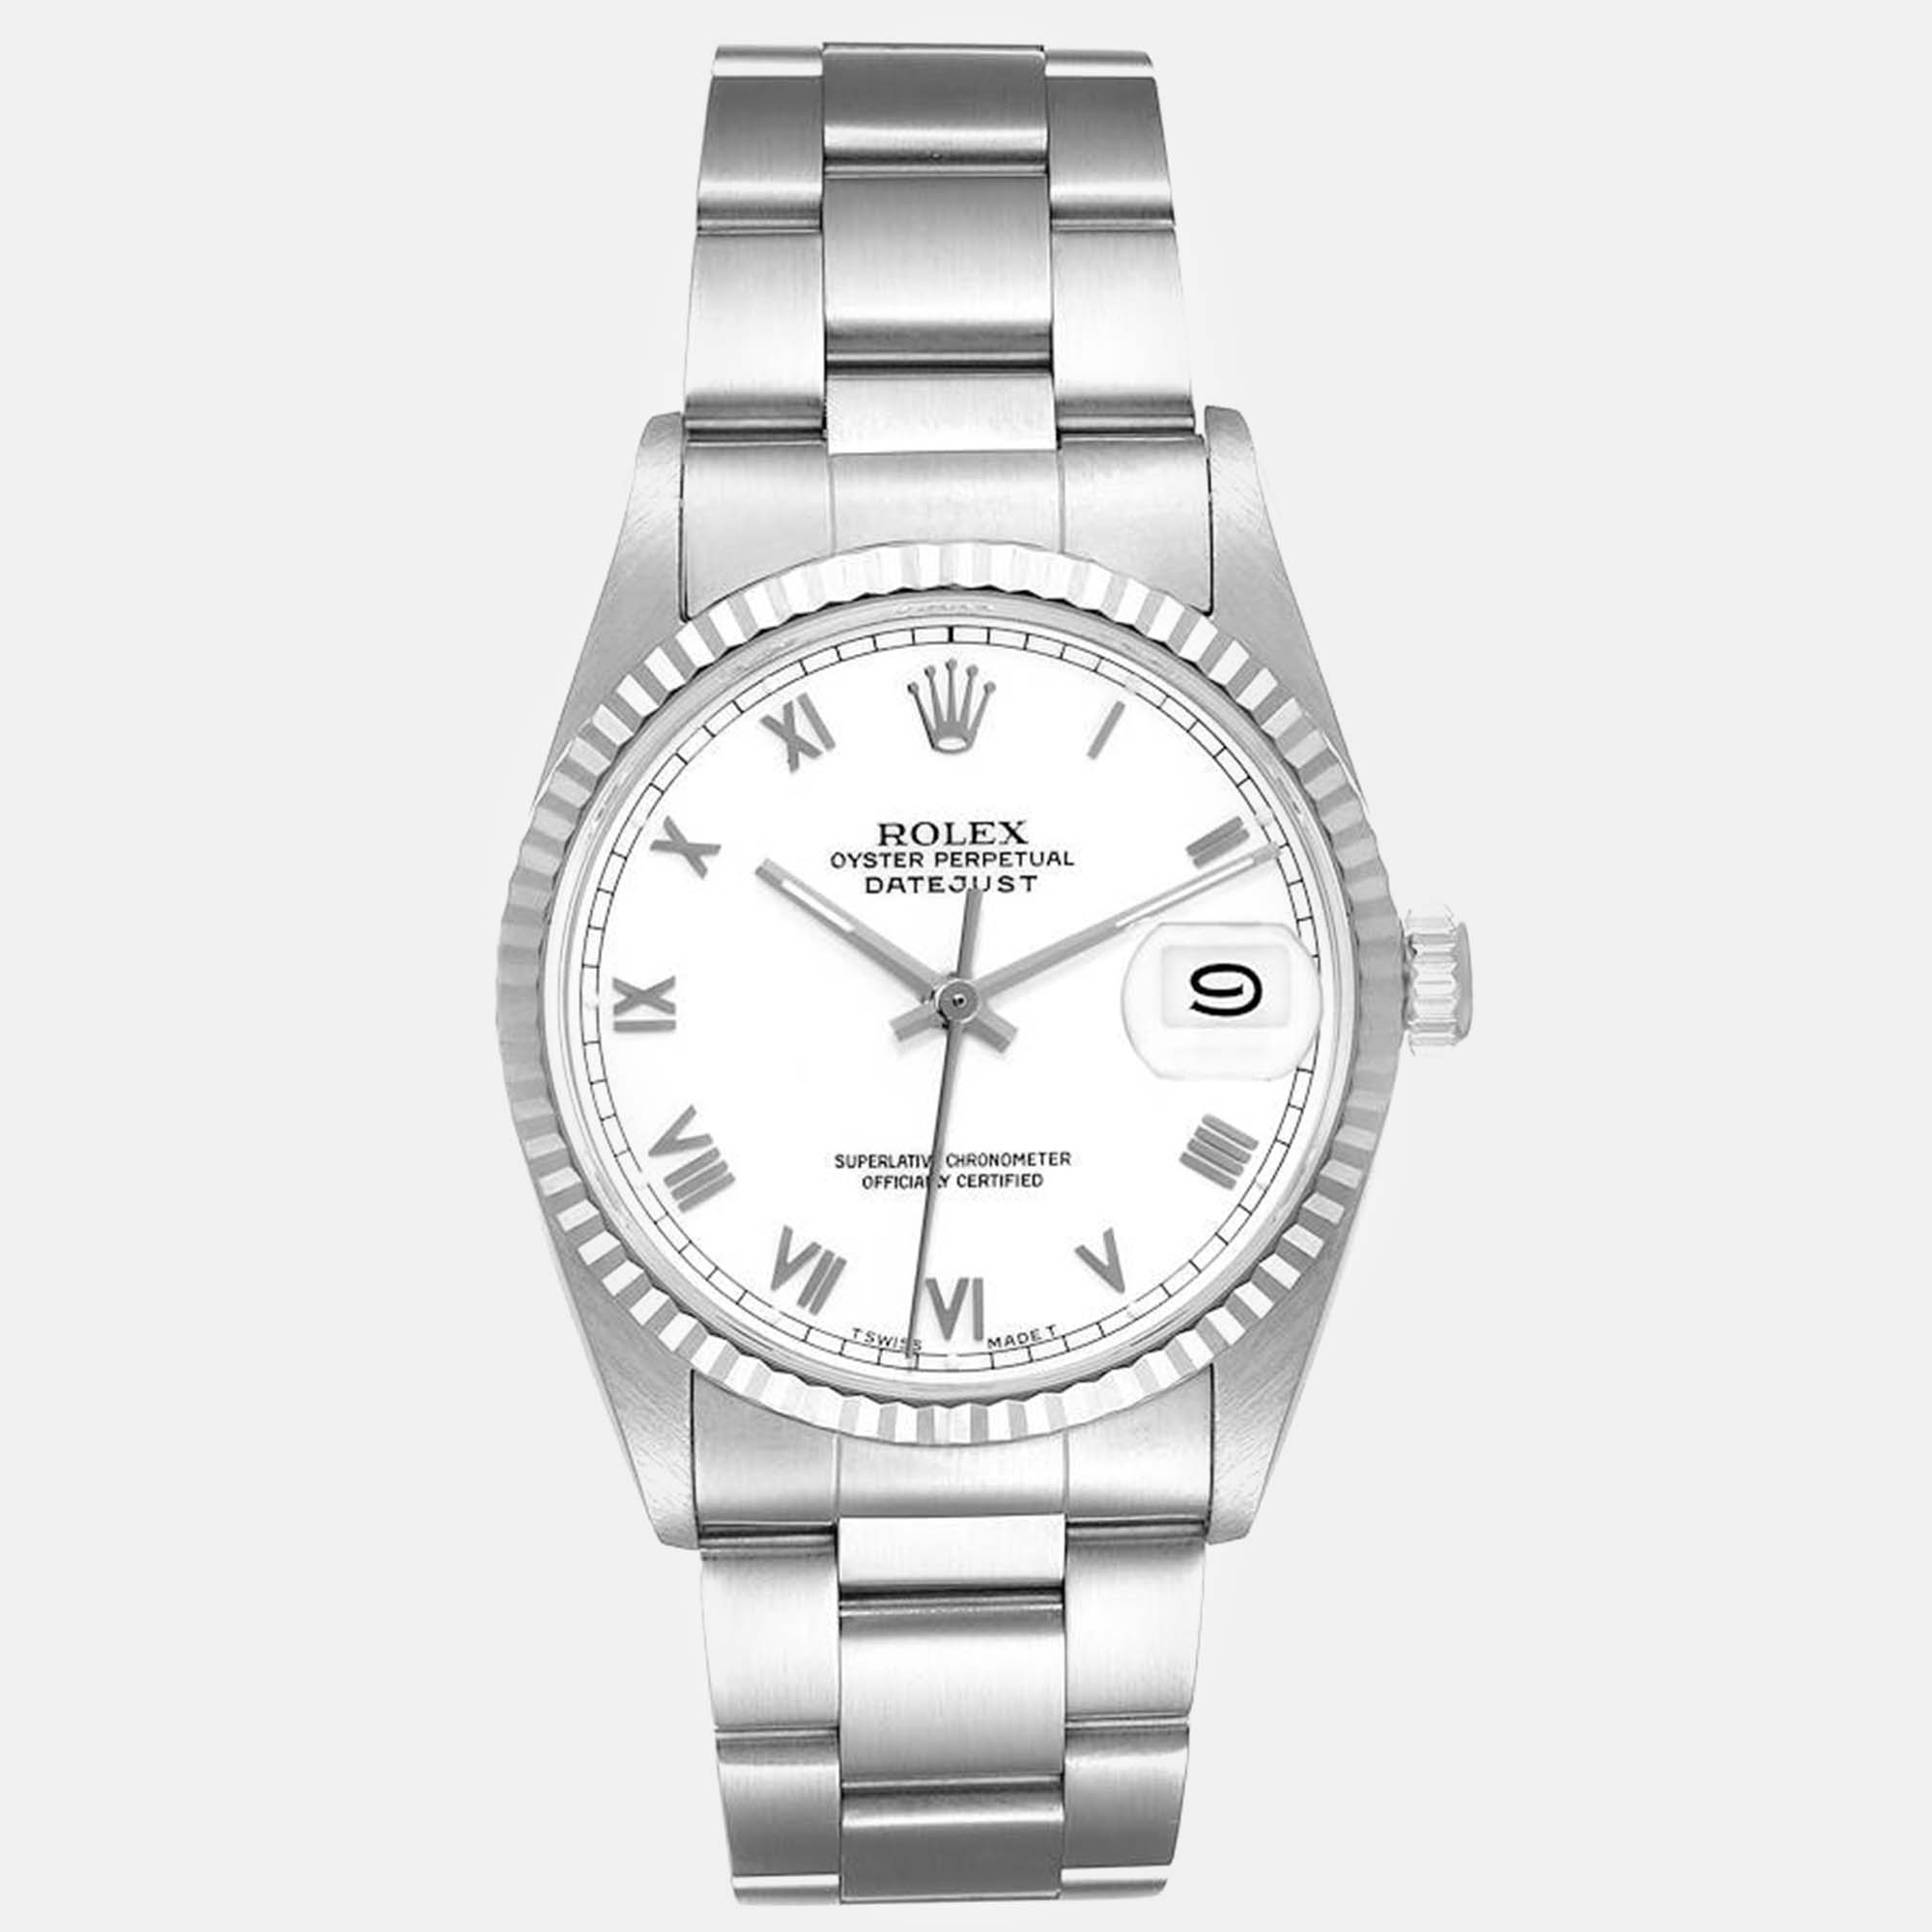 Rolex datejust roman dial steel white gold men's watch 36 mm